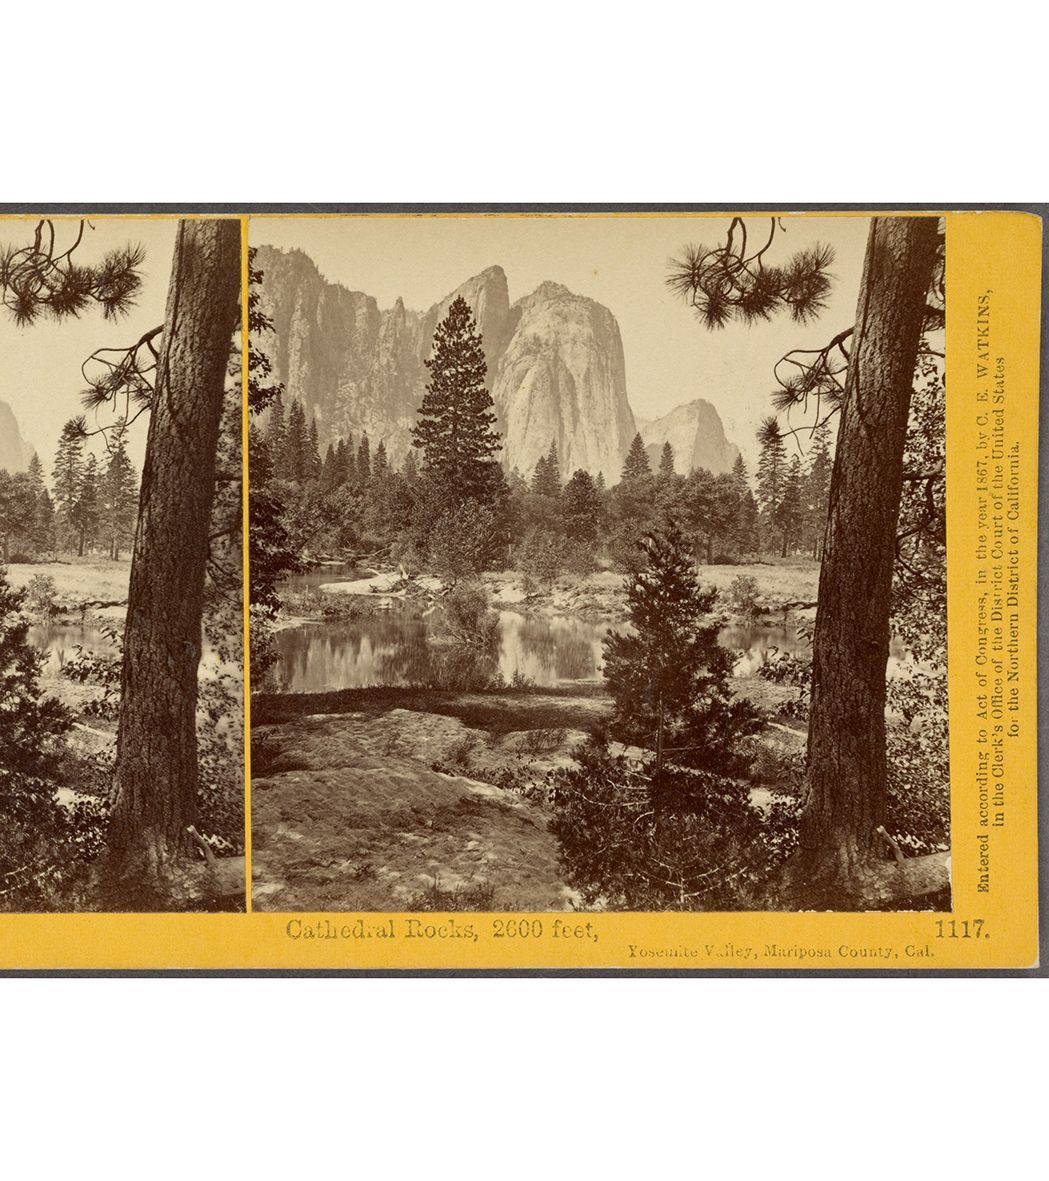 07/40 Carleton E. Watkins

‘Devil Canyon’, c.1868; ‘The Grizzly Giant’, 1861; ‘Cathedral Rocks’, 1867

#CarletonEWatkins #Yosemite #geologicalsurvey #AmericanWest #ClarenceKing #catastrophism #sublime #naturaltheology #paradise #eden
@librarycongress @metmuseum @nypl